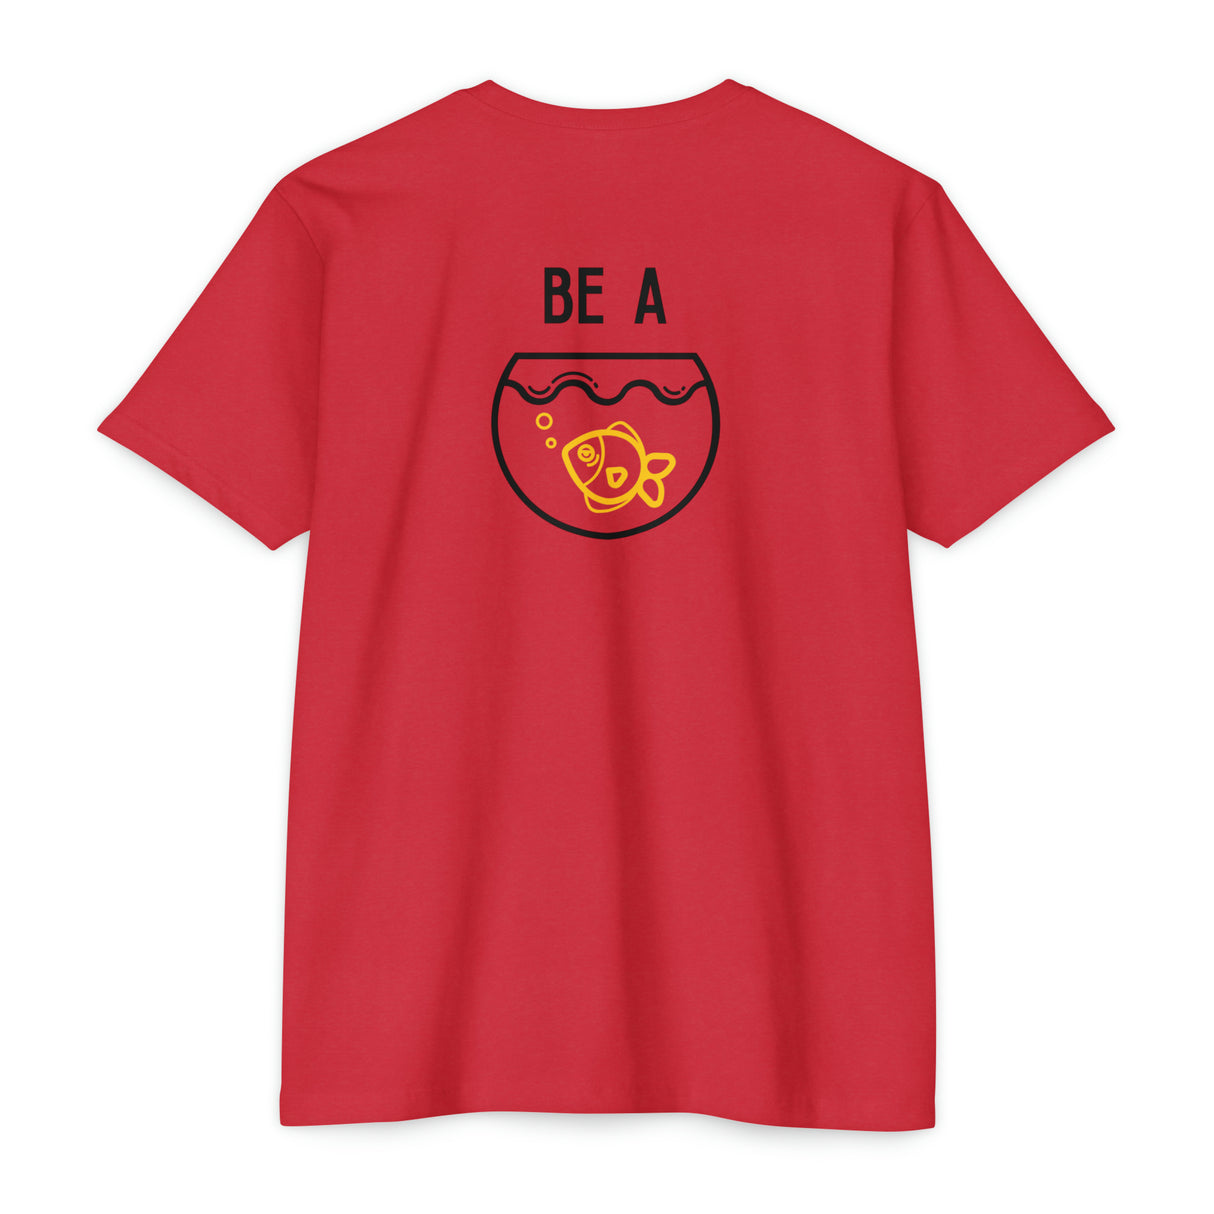 Be a Goldfish Inspirational T-Shirt 2.0